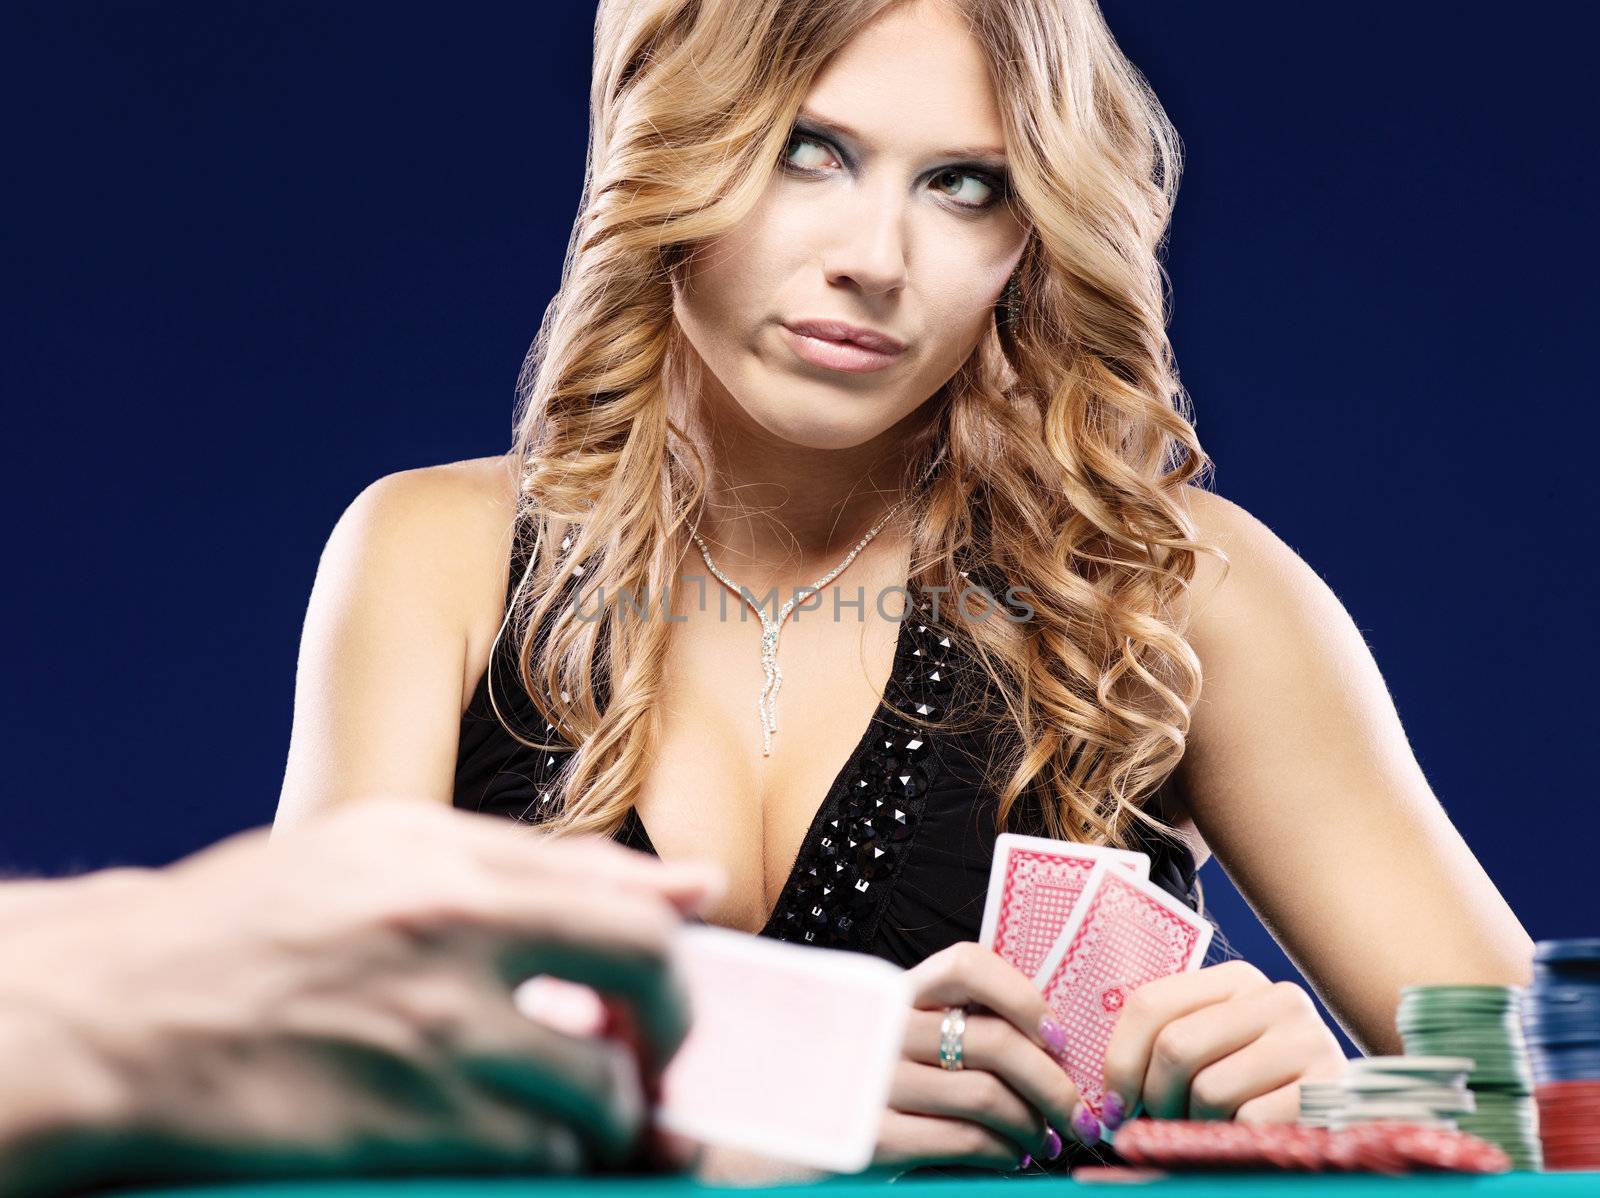 Blond woman doubt in a card gambling match